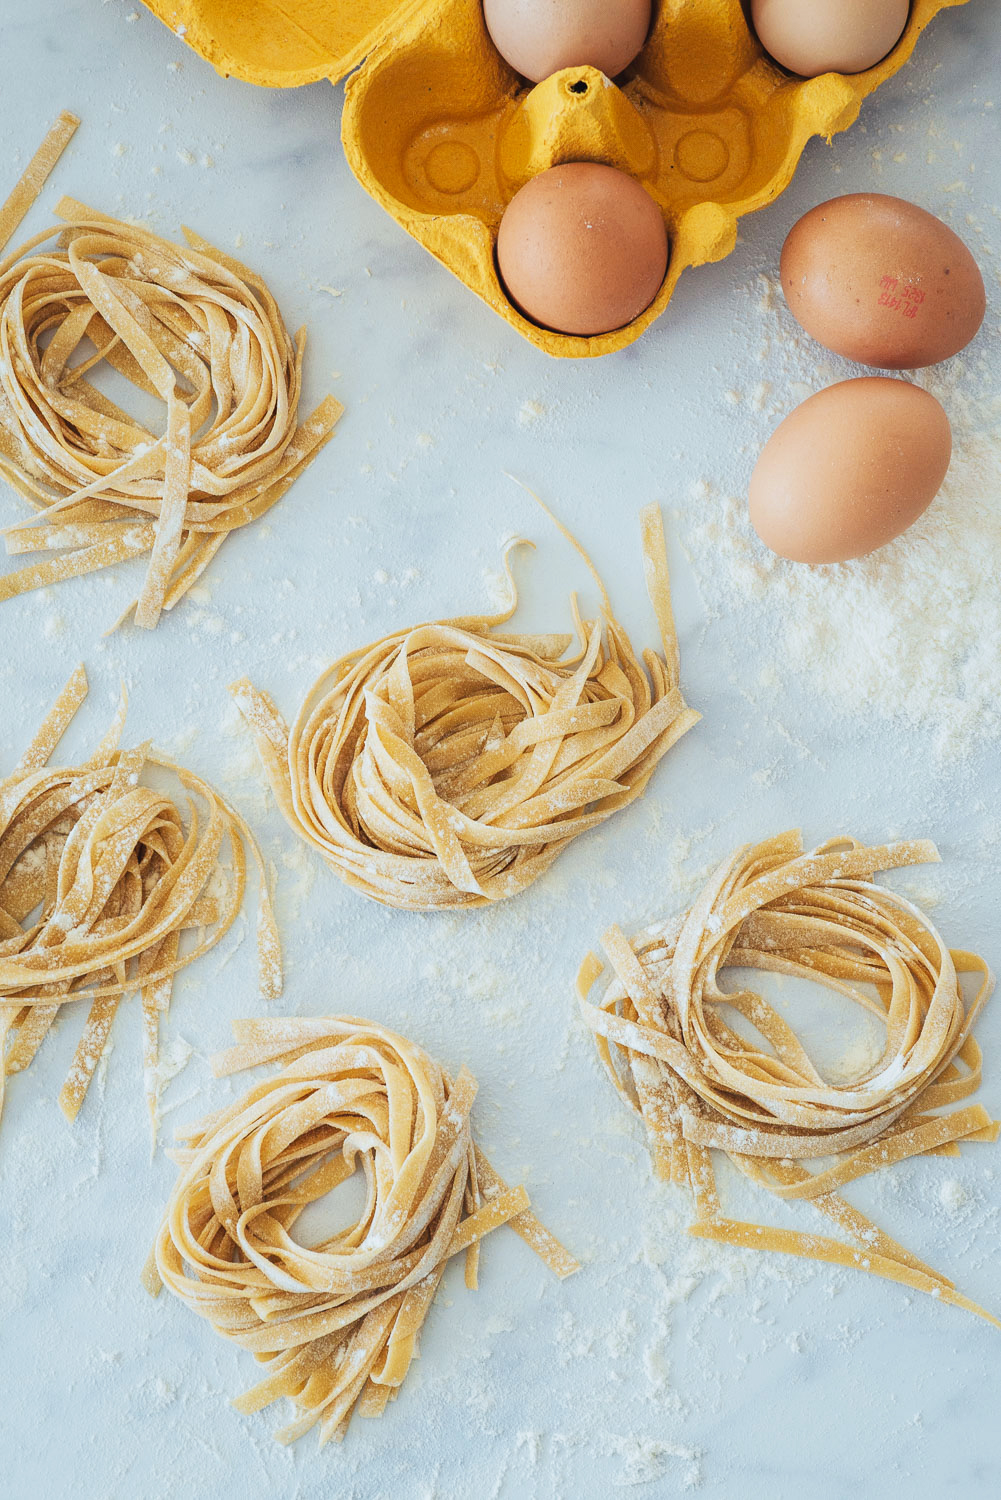 Fresh homemade tagliatelle pasta with eggs